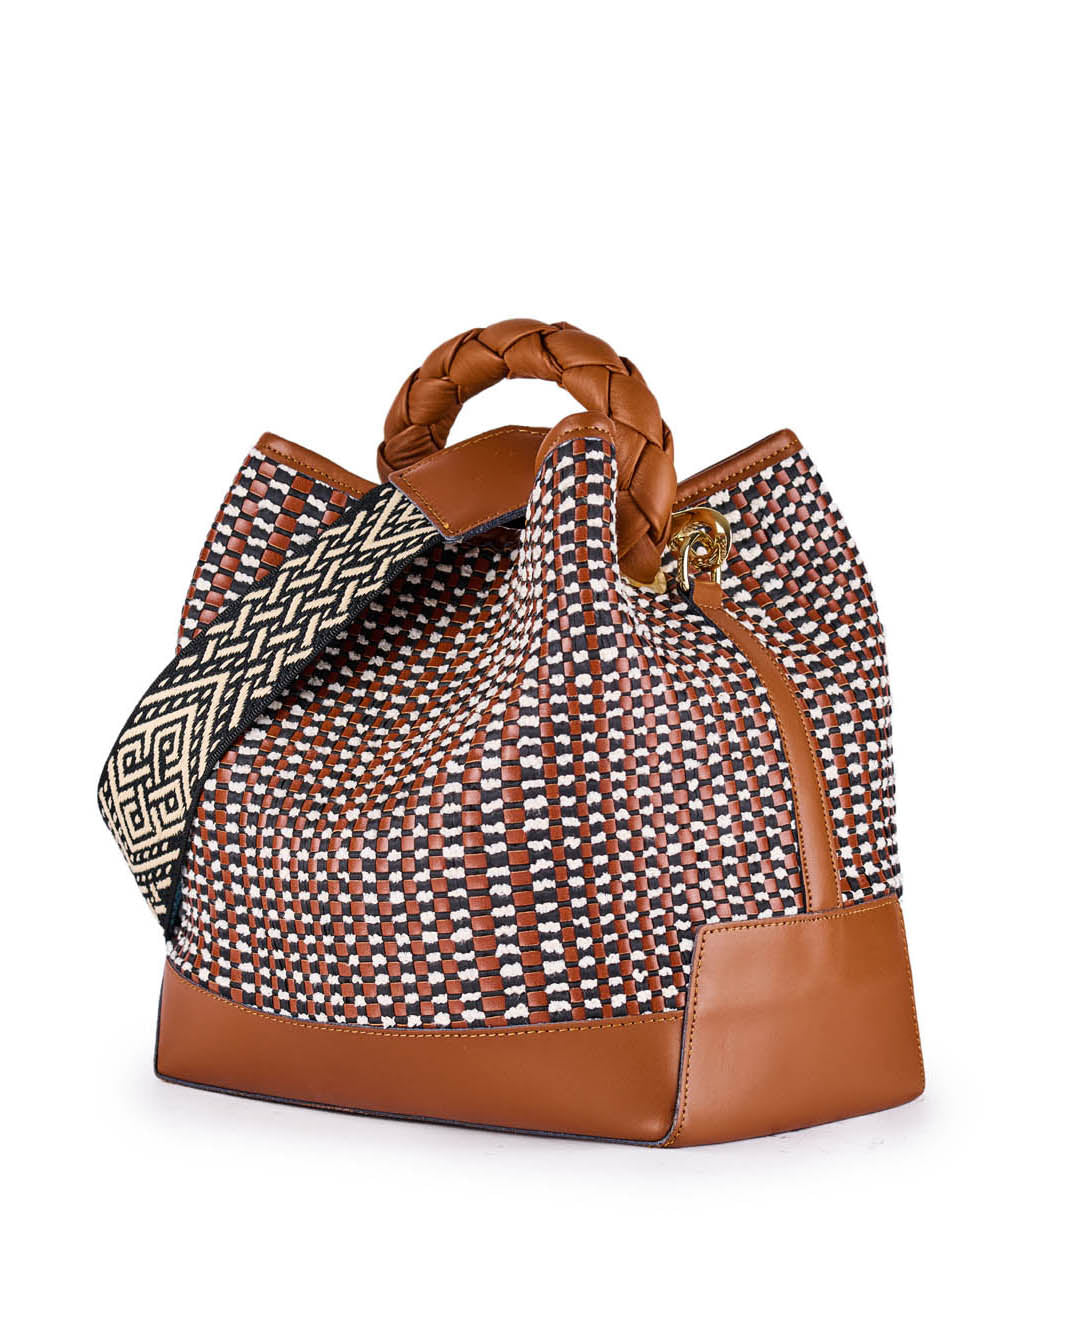 Viamailbag Coral Damier Brown Eco-Leather Bucket Bag